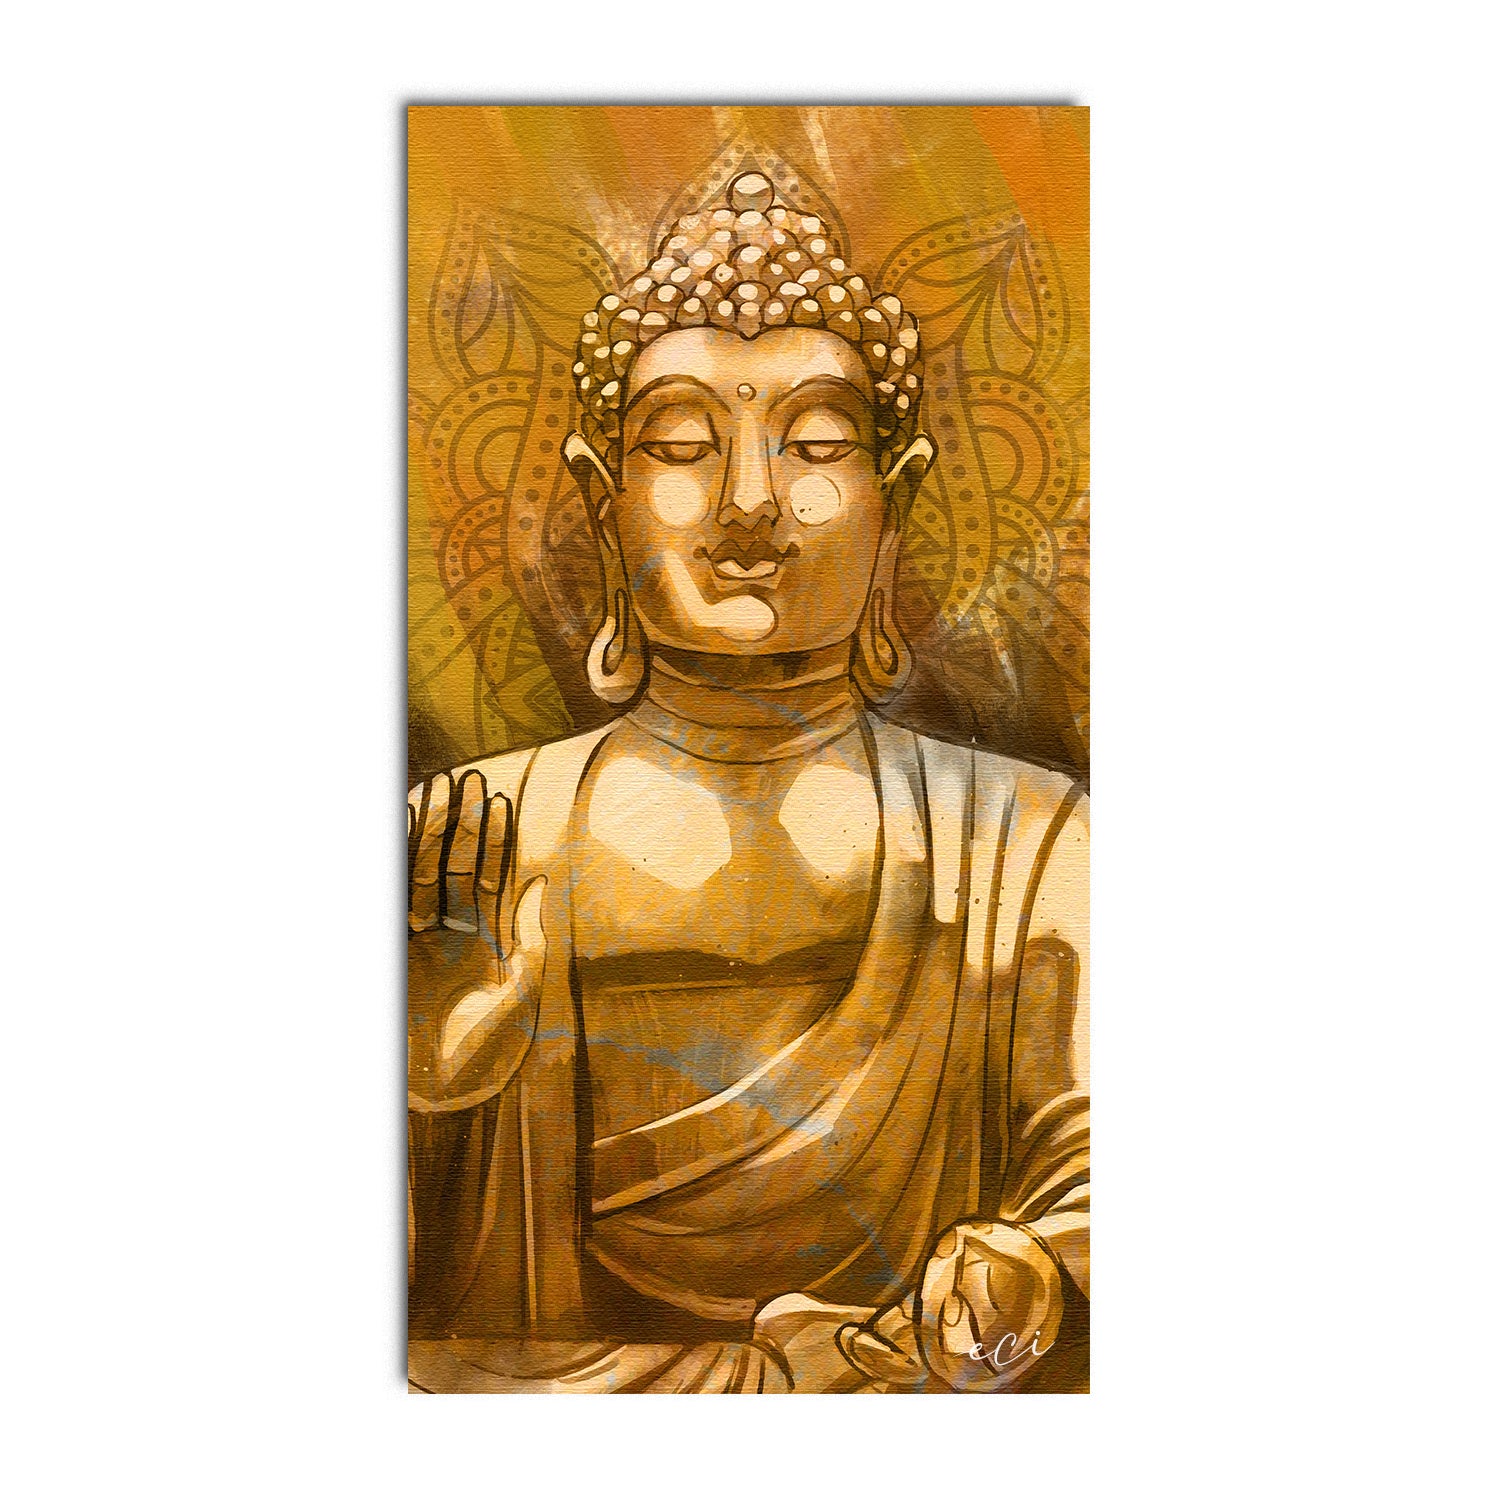 Meditating Blessing Buddha Original Design Canvas Printed Wall Painting 2